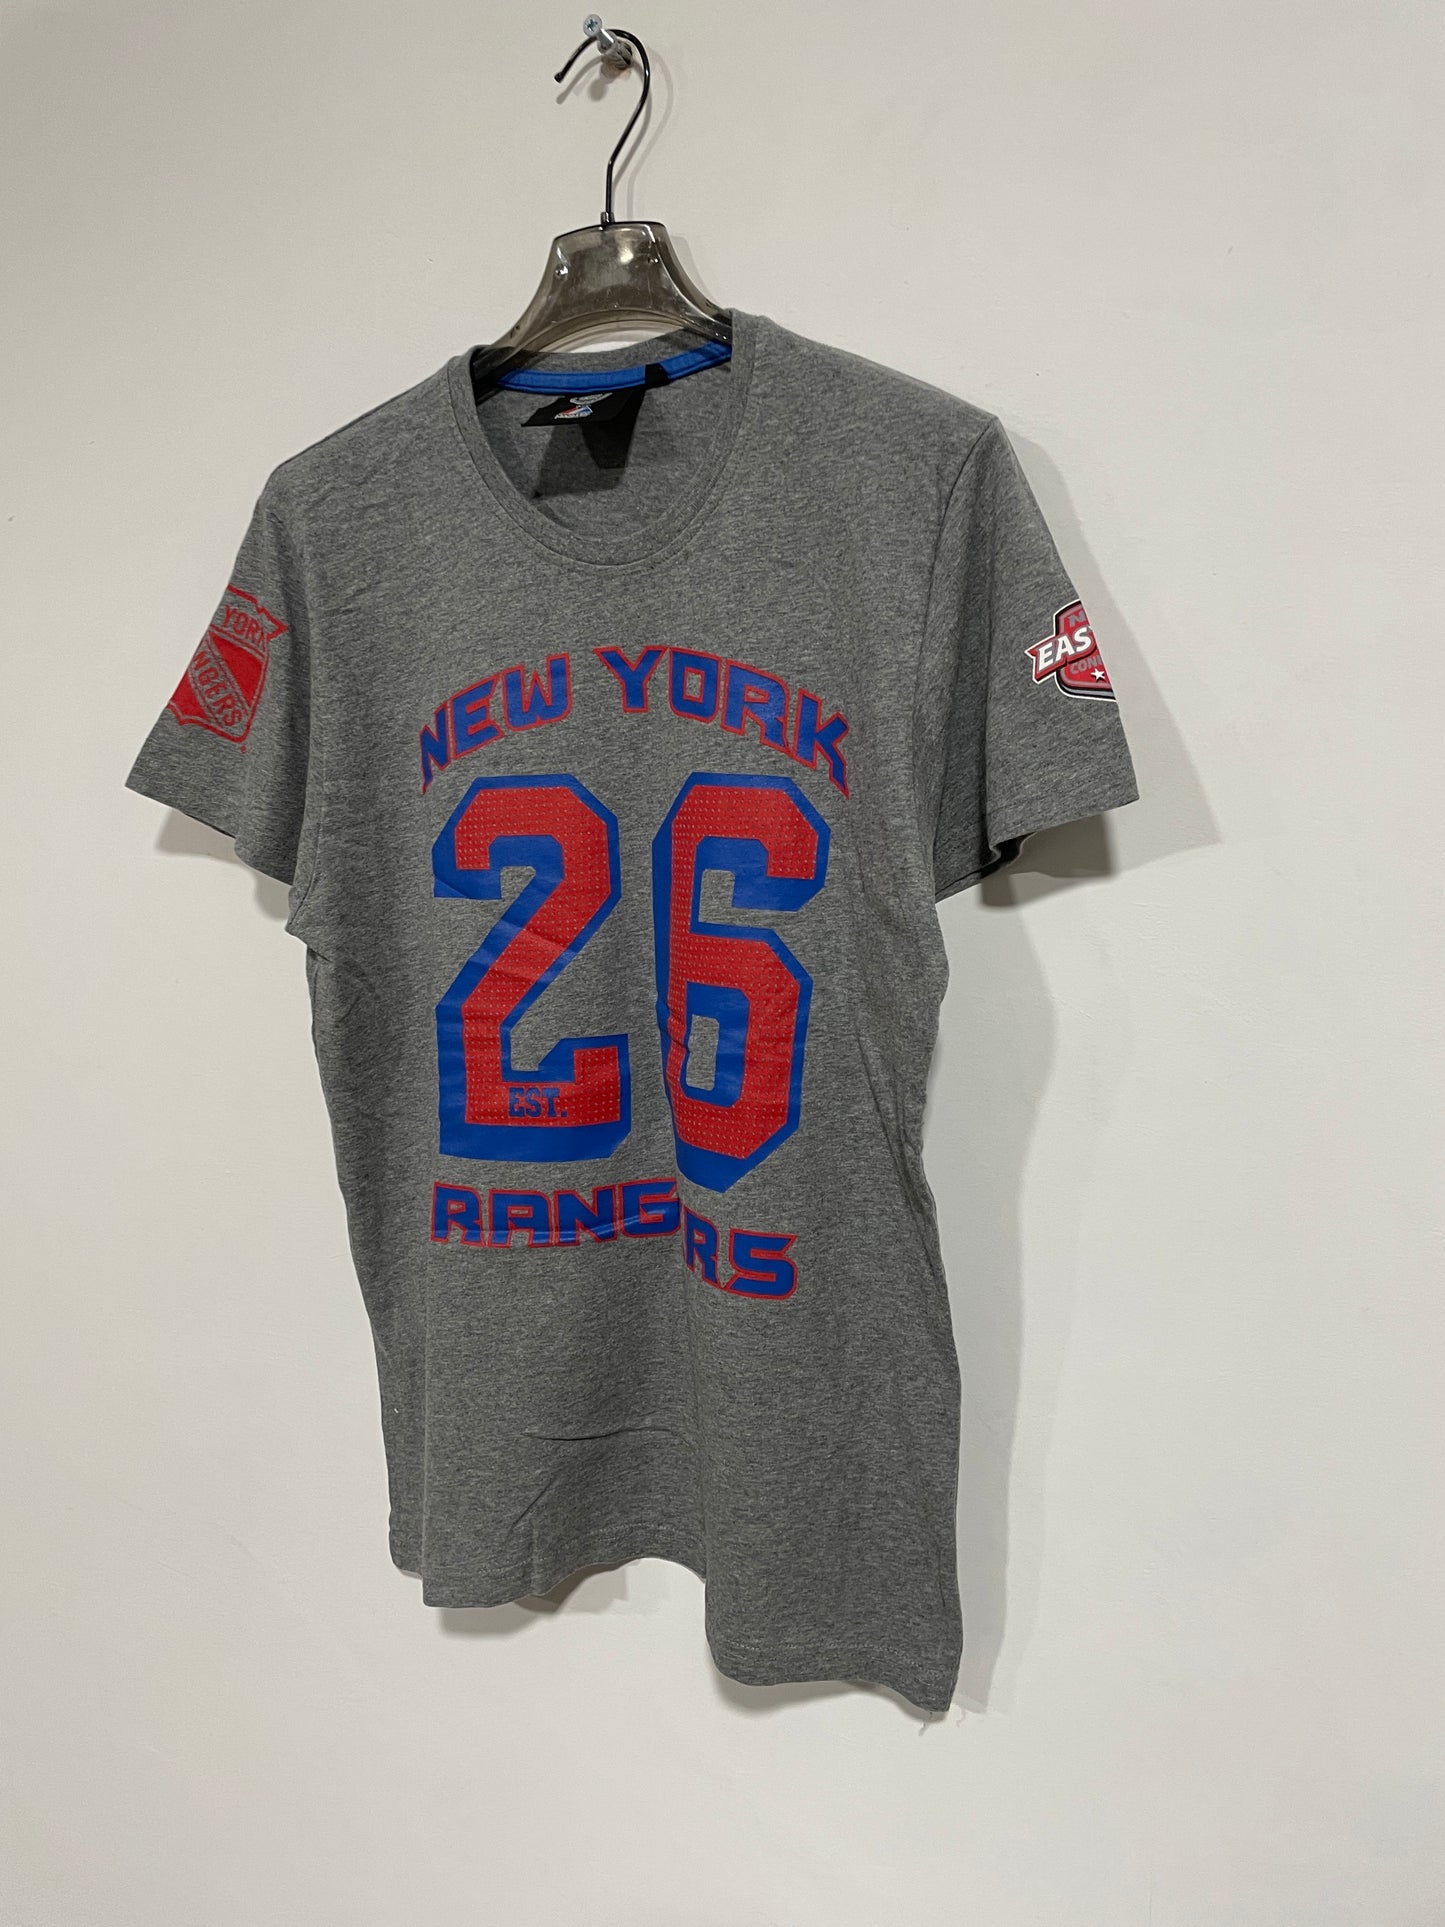 Rara t shirt Majestic New York Rangers (A852)